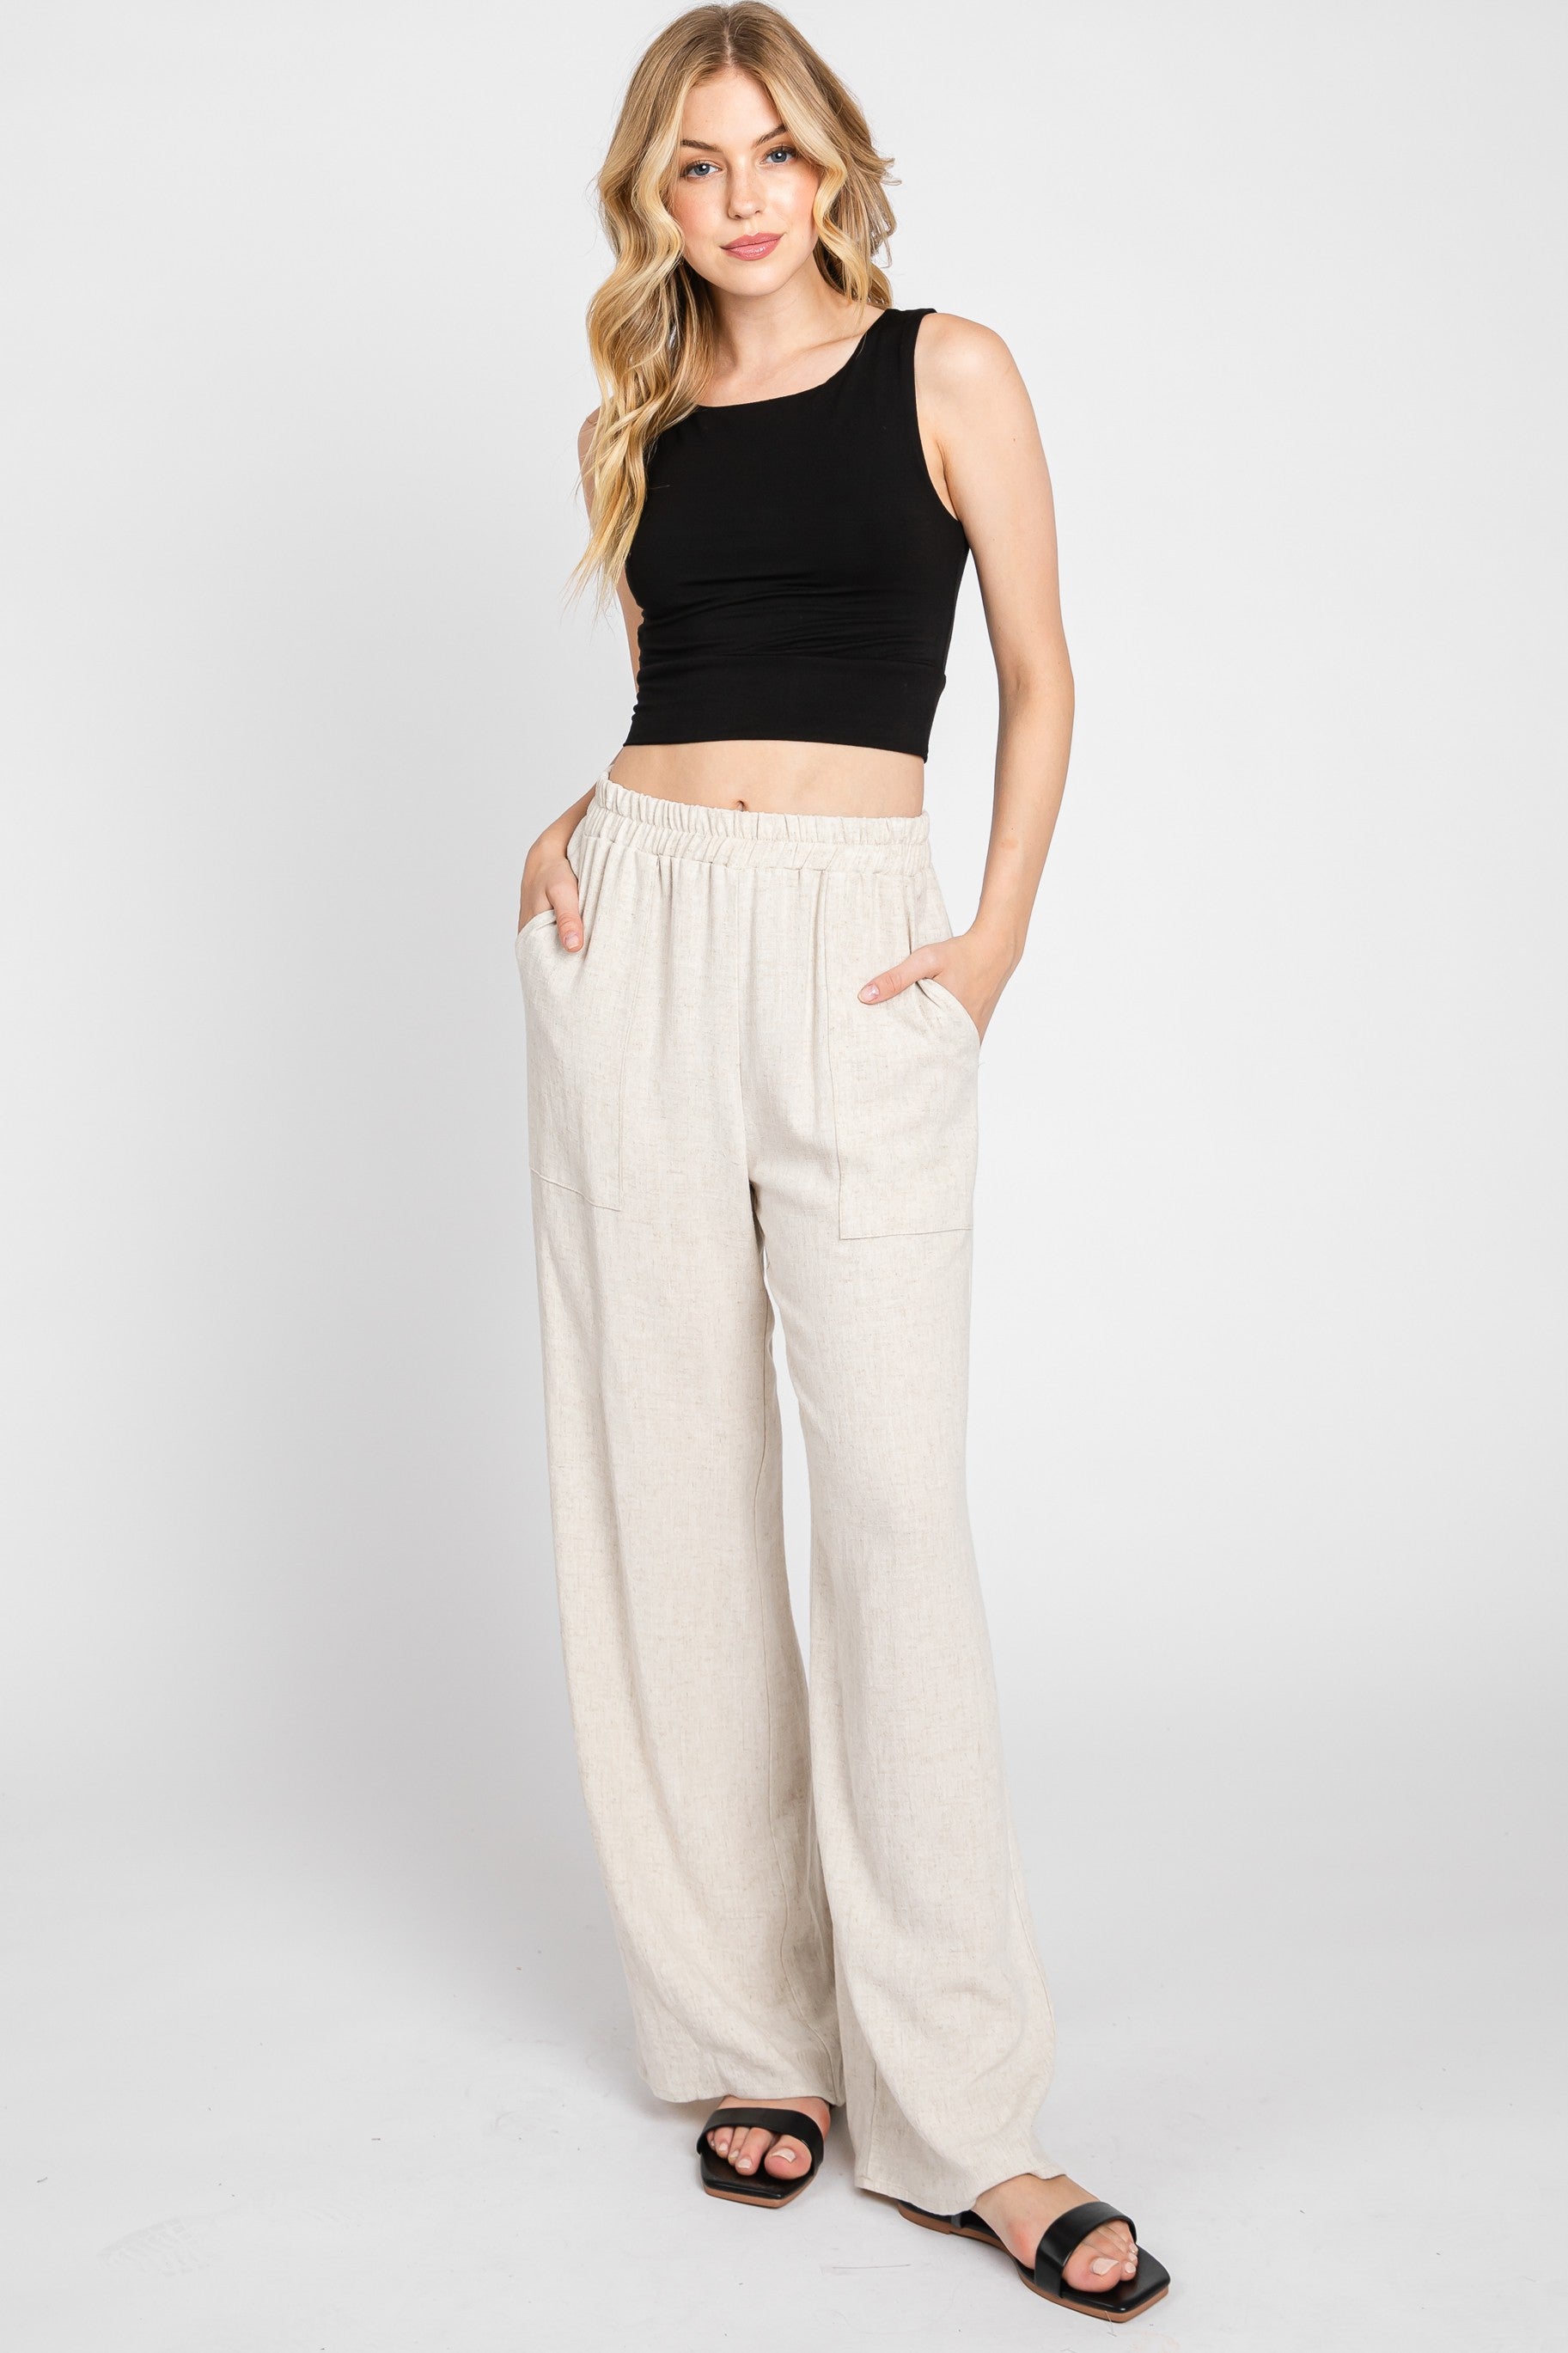 Gibobby Pajamas Pants for Women Comfy Fleece Pants Casual Stretch